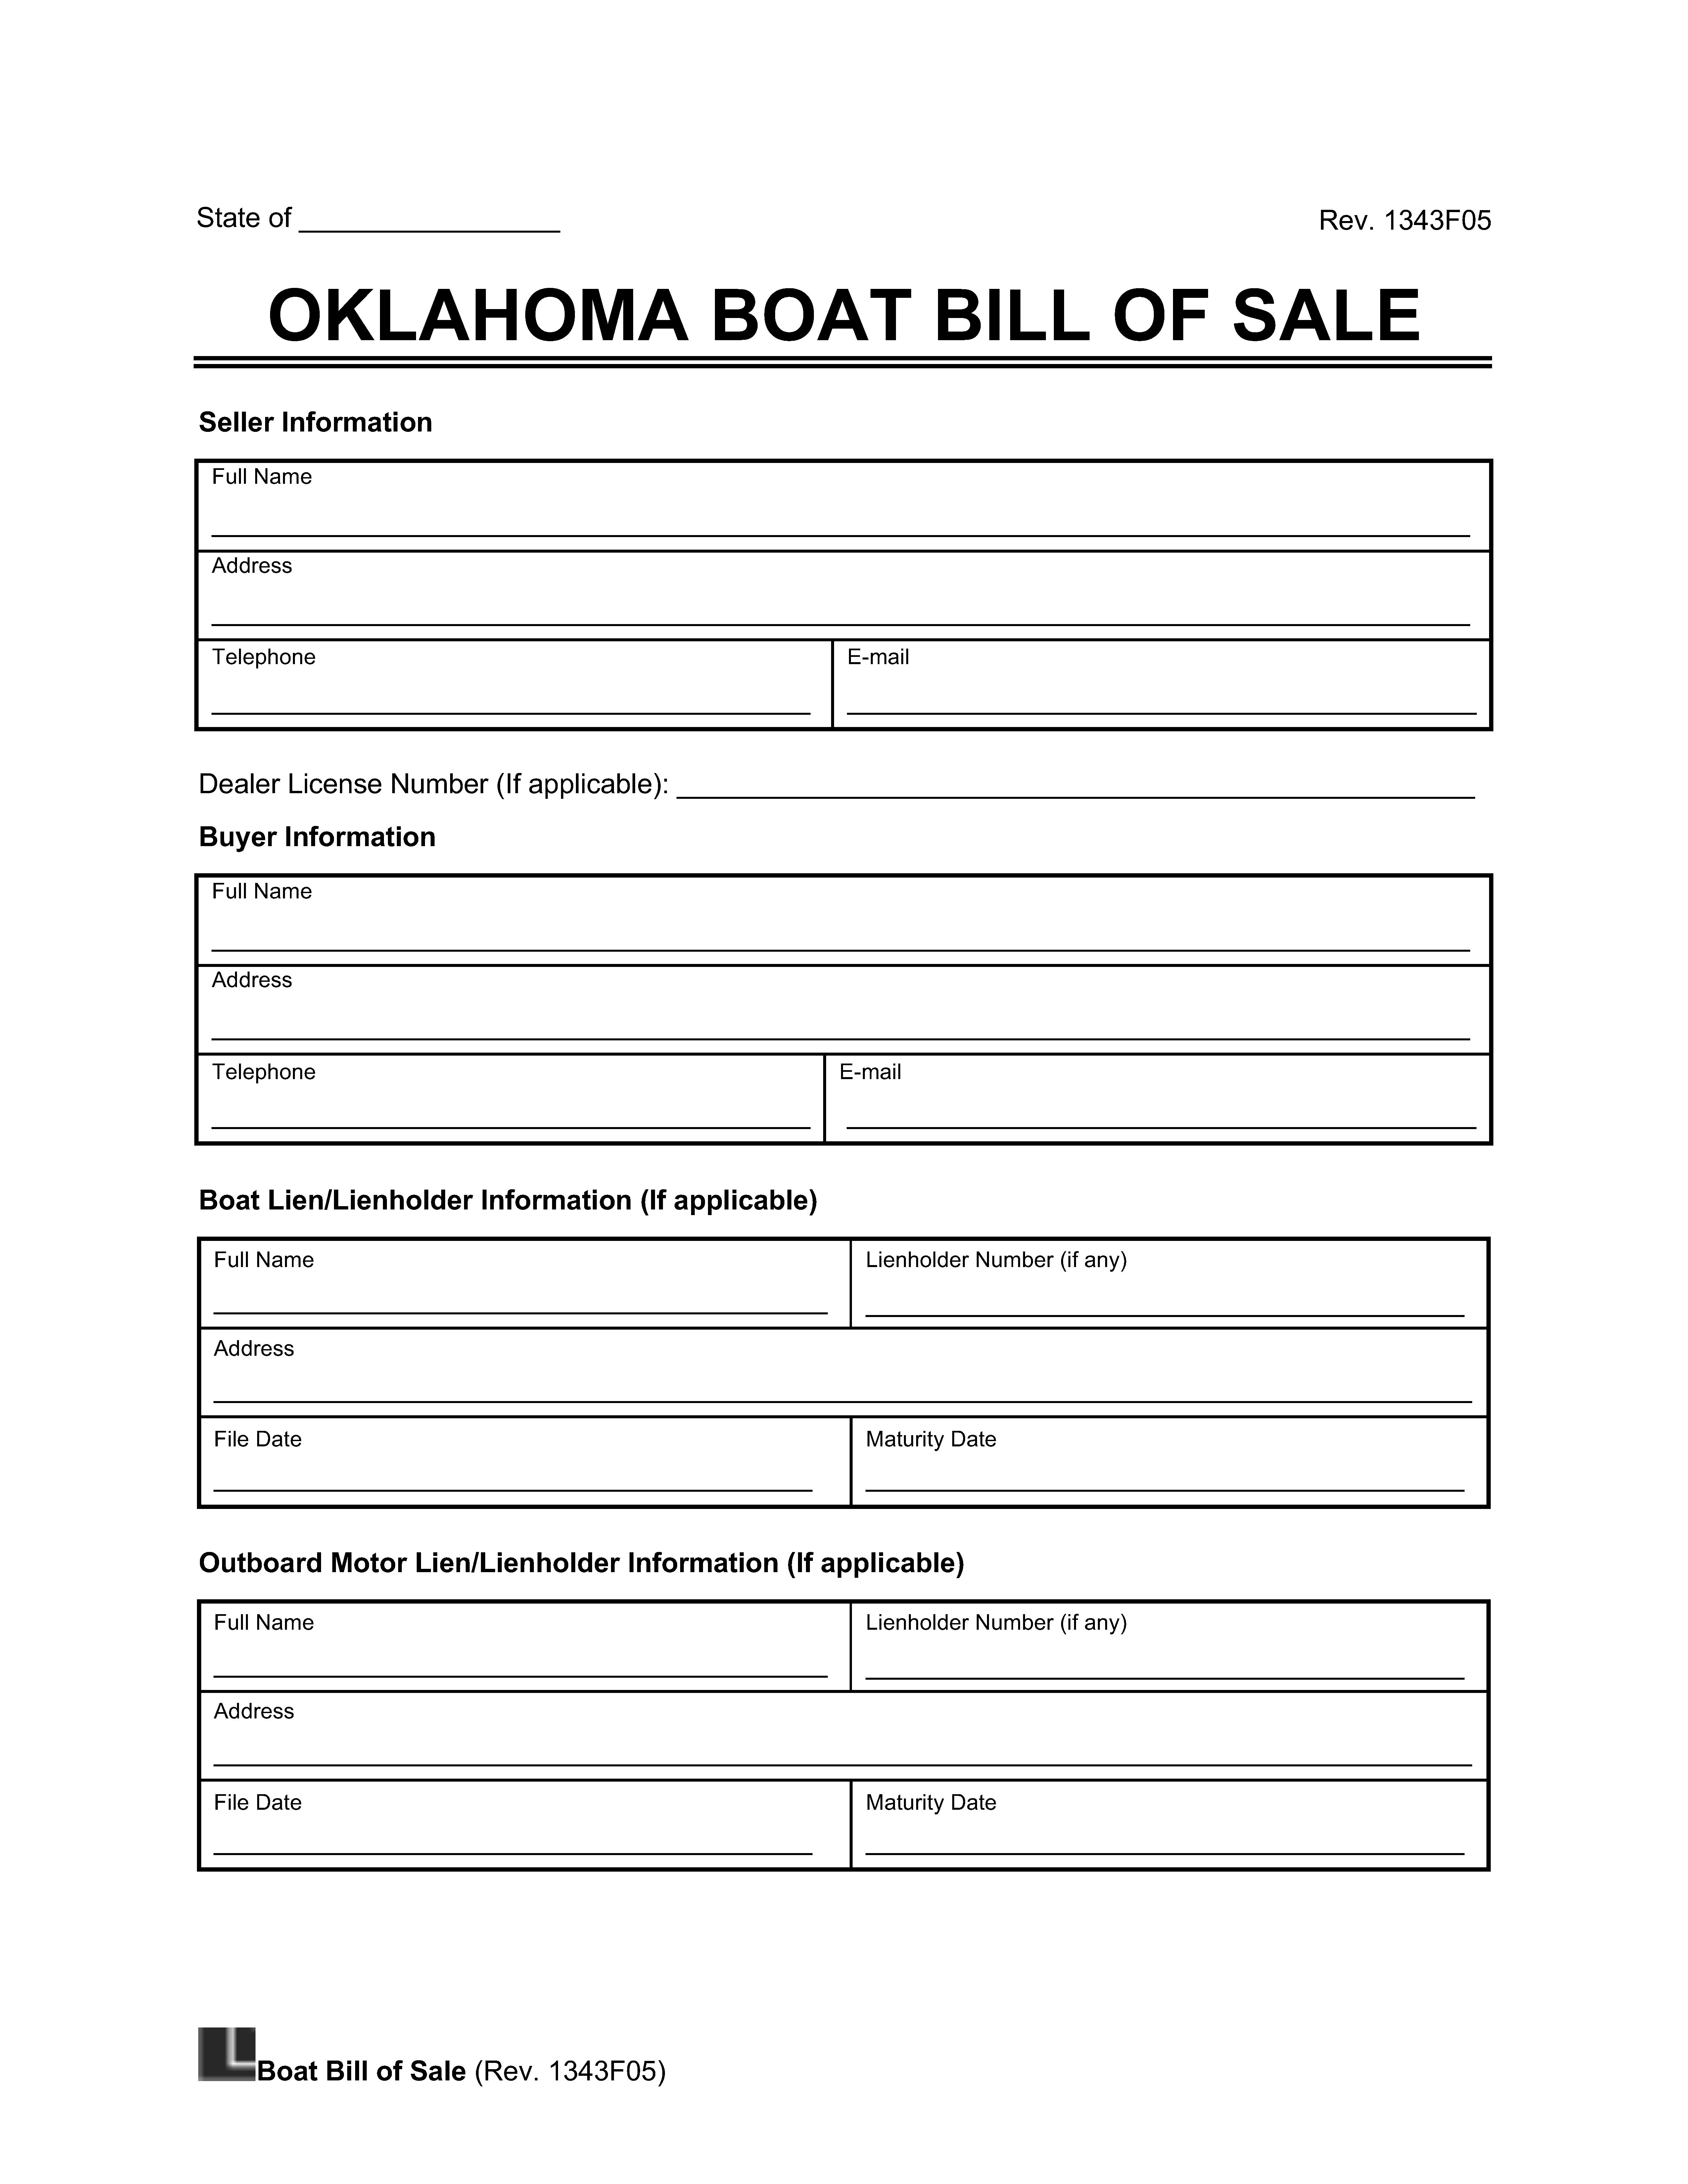 Boat Bill of Sale Oklahoma screenshot